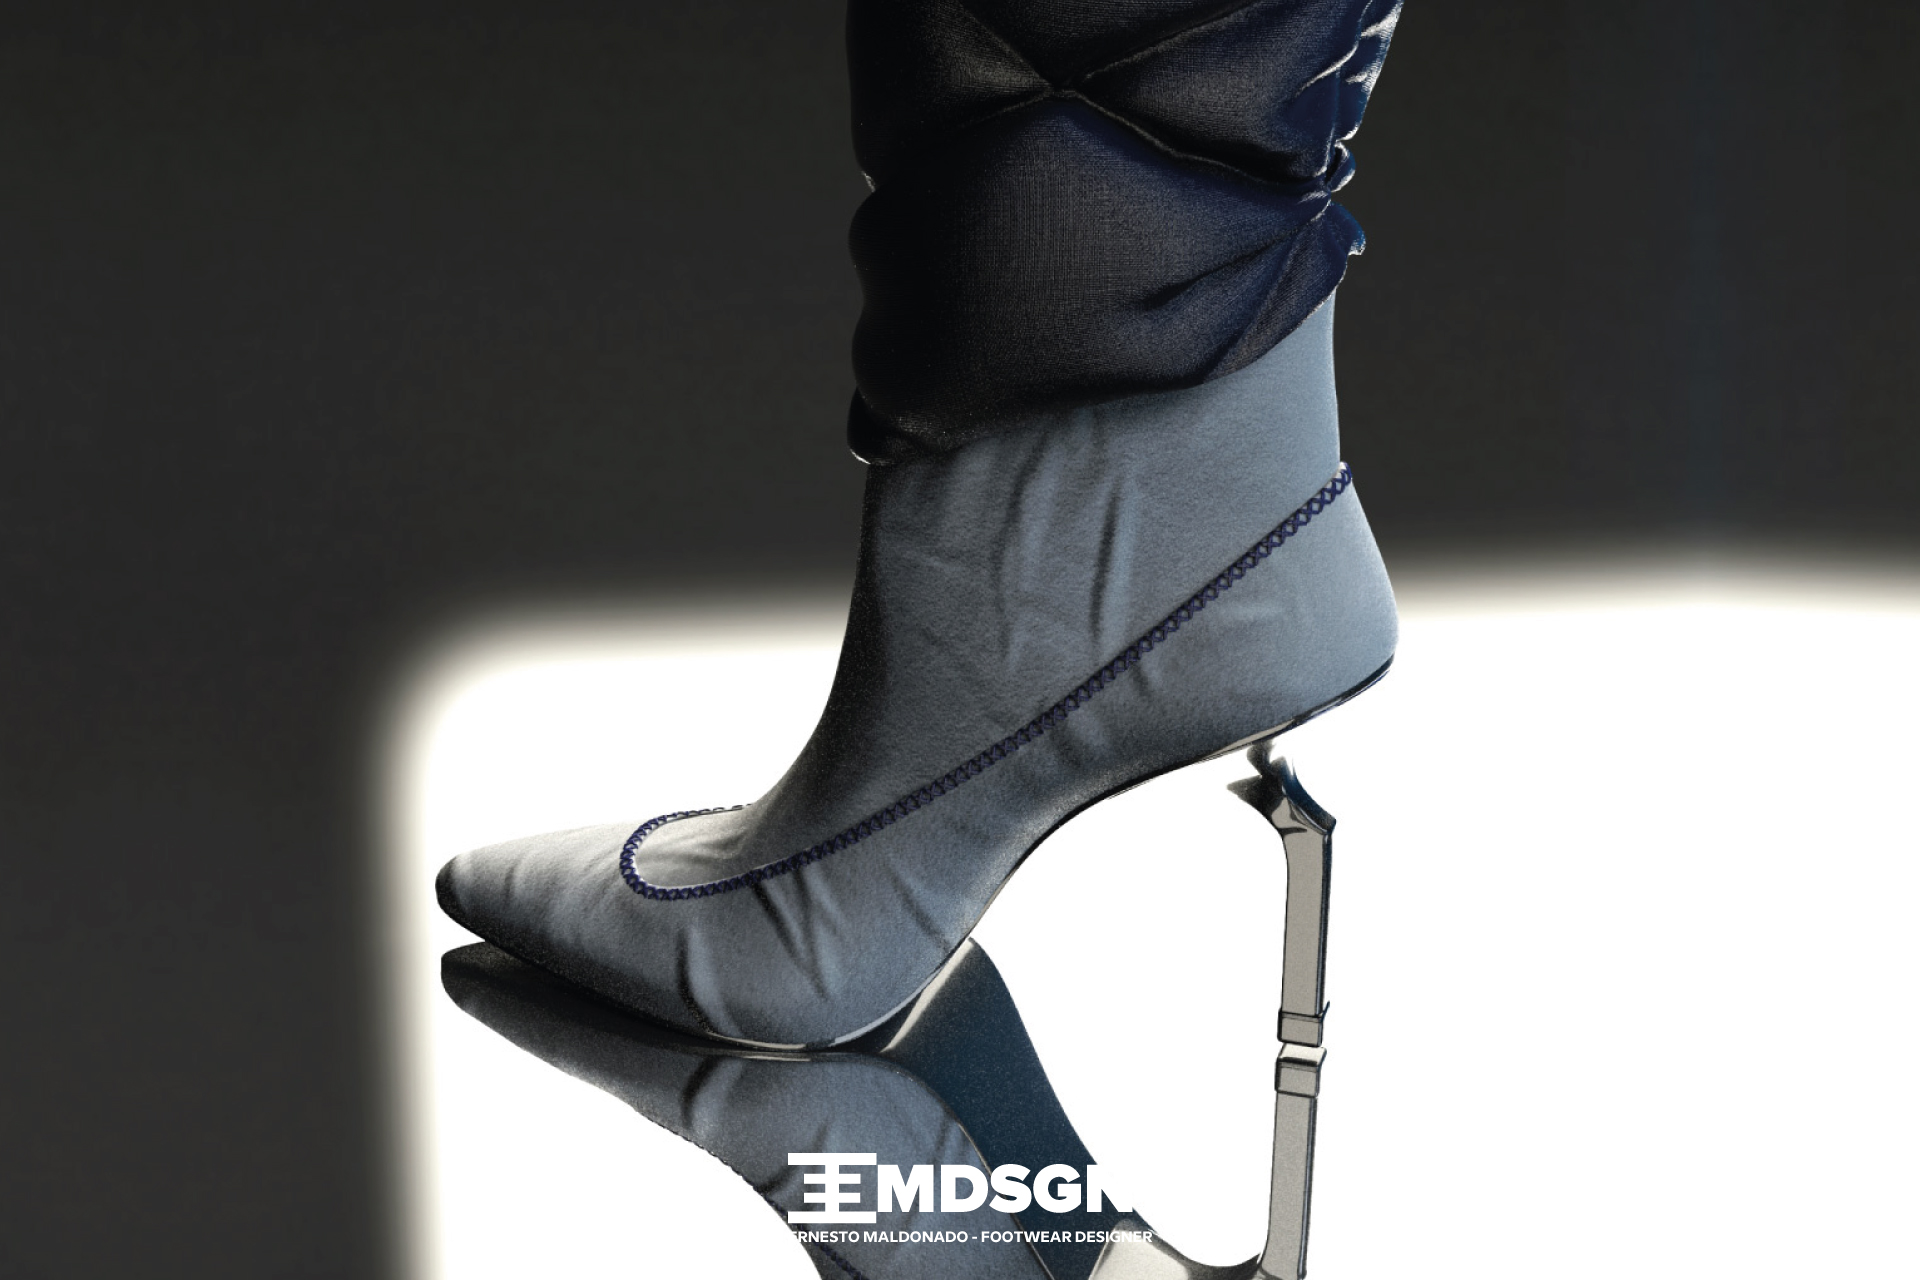 ernesto maldonado footwear 3d designer shoes design